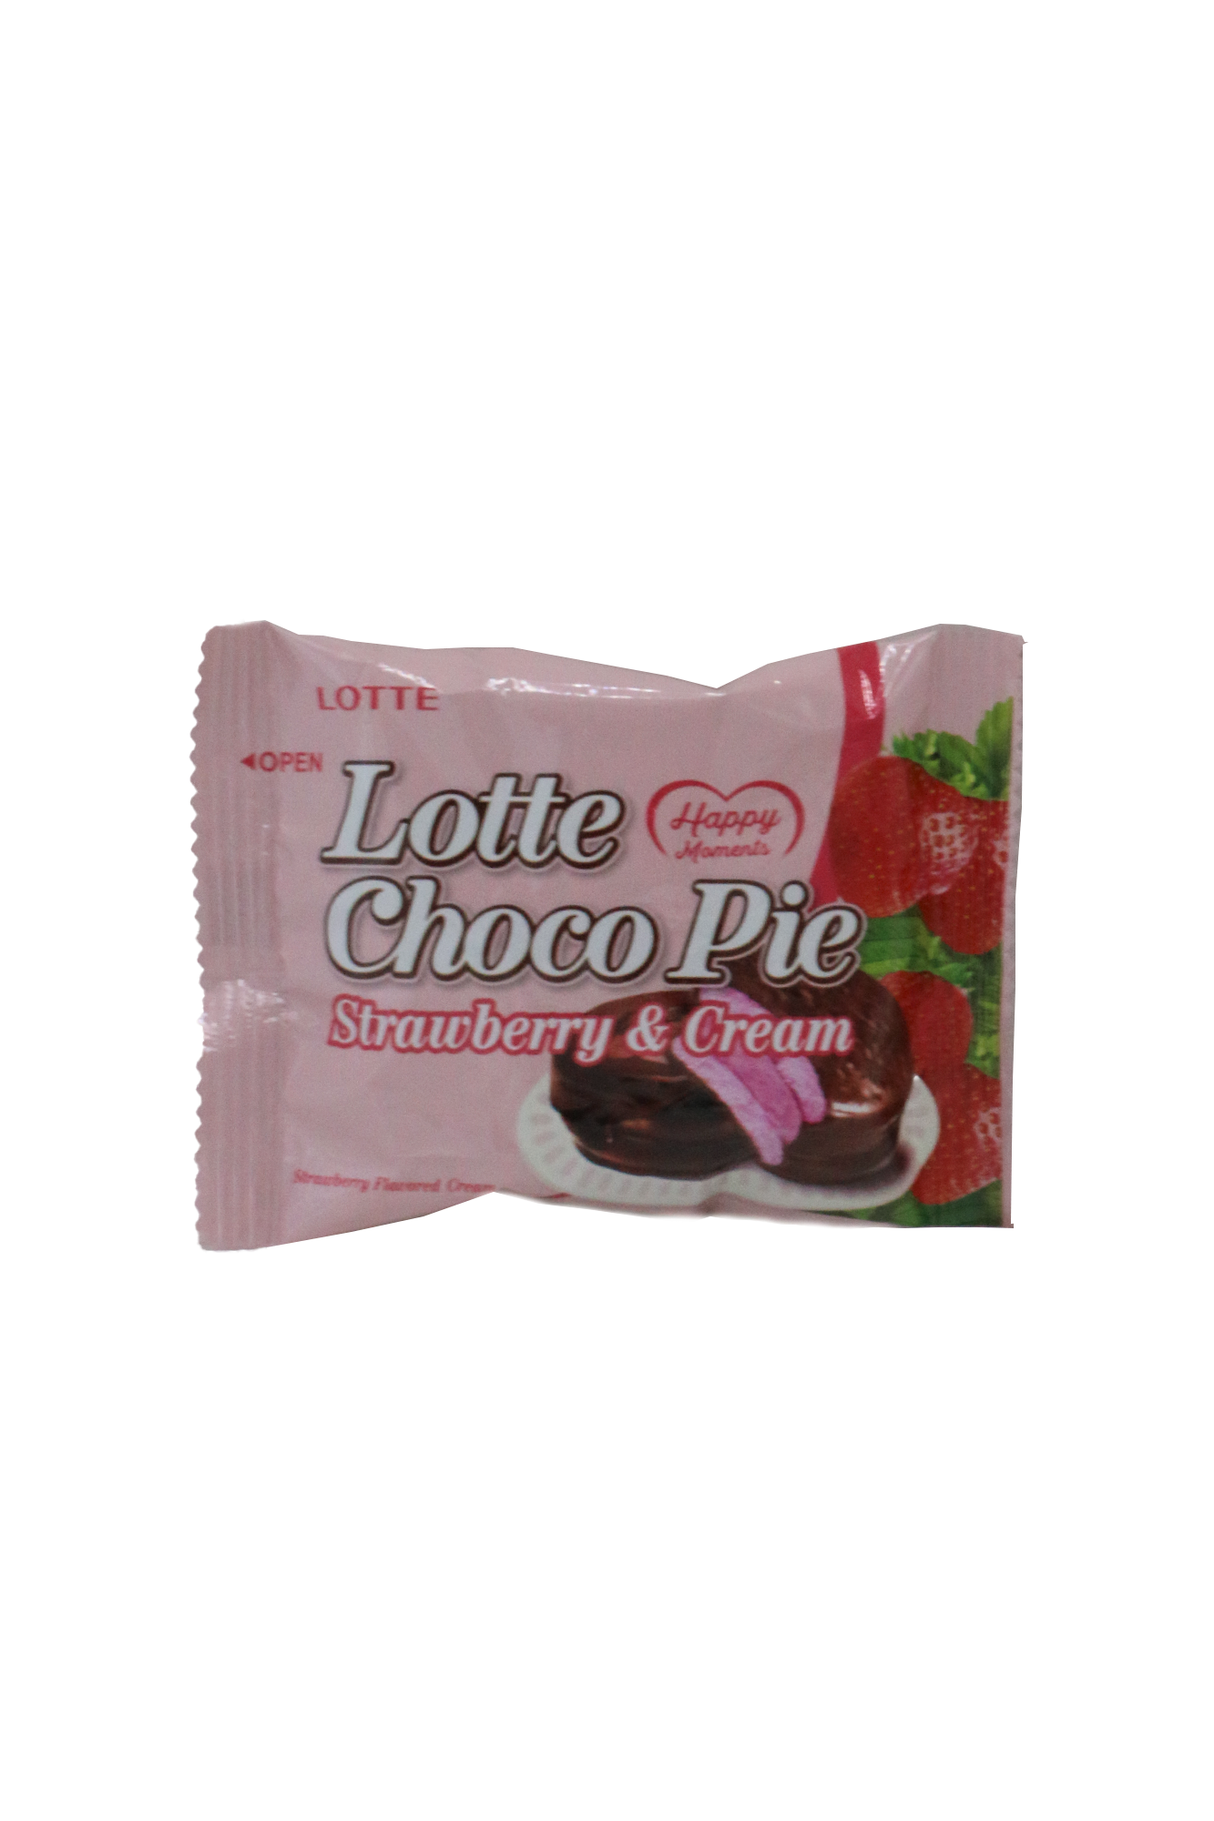 lotte choco pie strawberry&cream 40rs